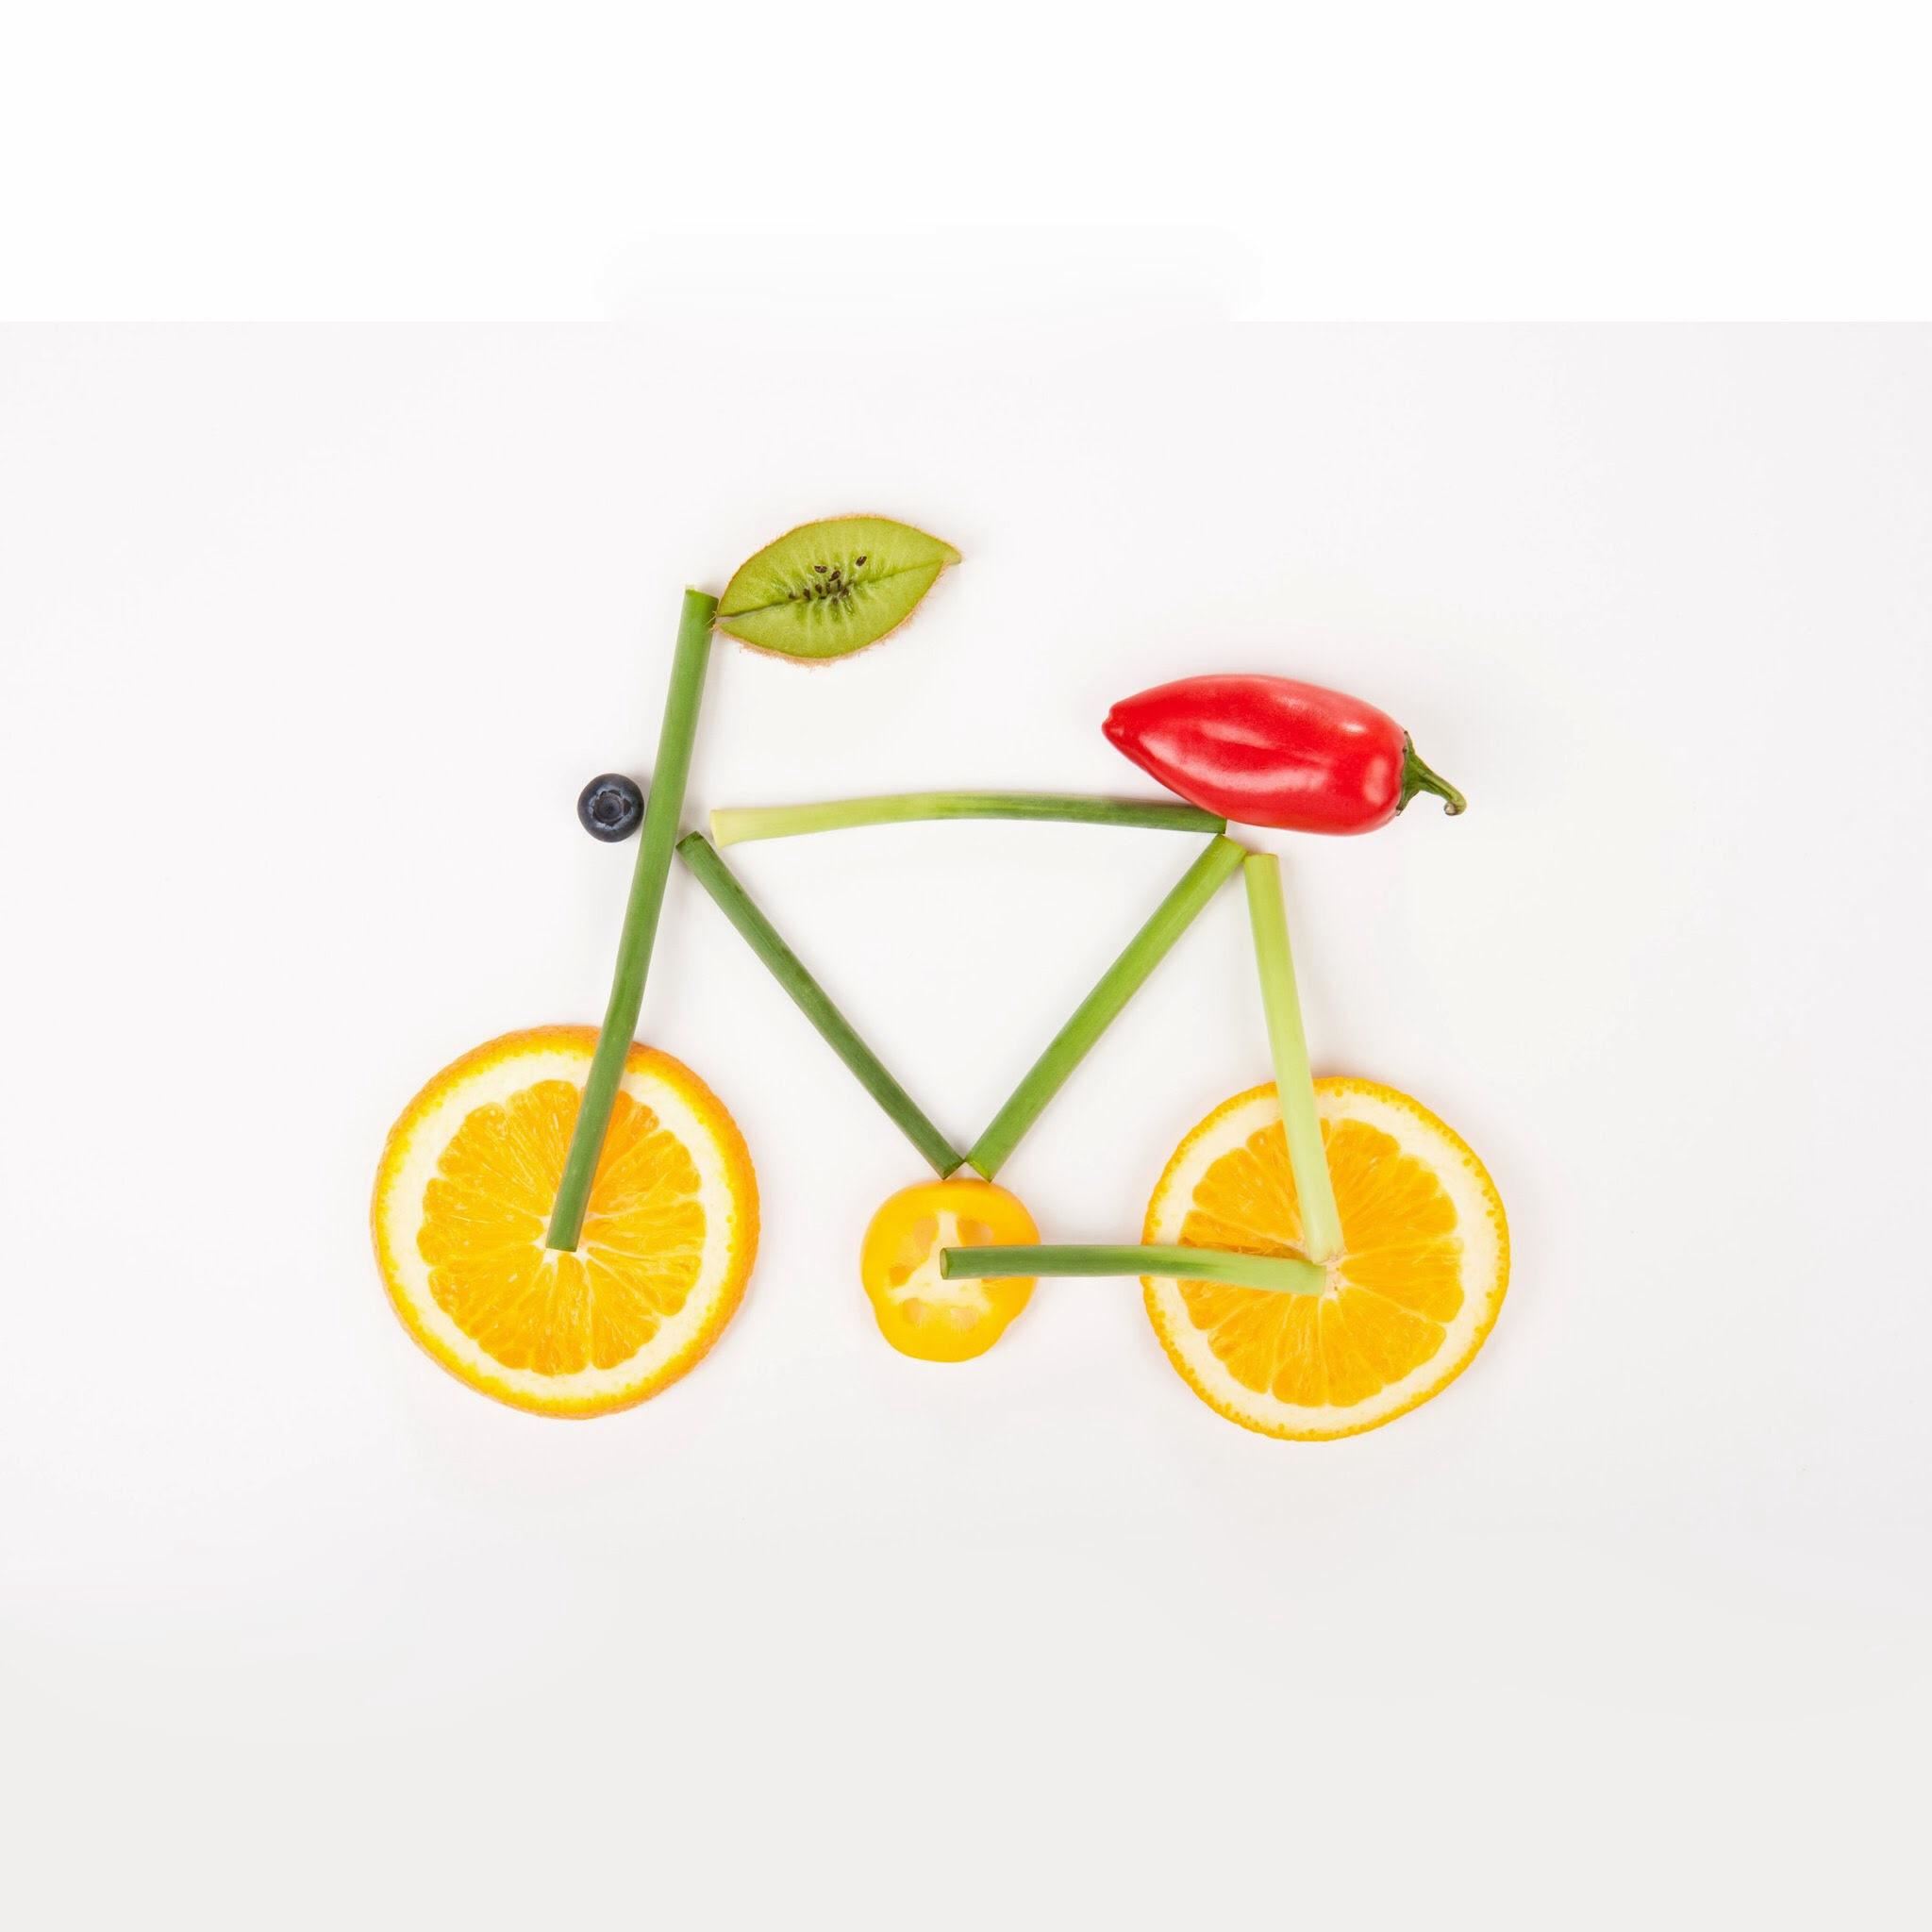 Orange Slice Fruit  Bicycle Platter iPad Air wallpaper 